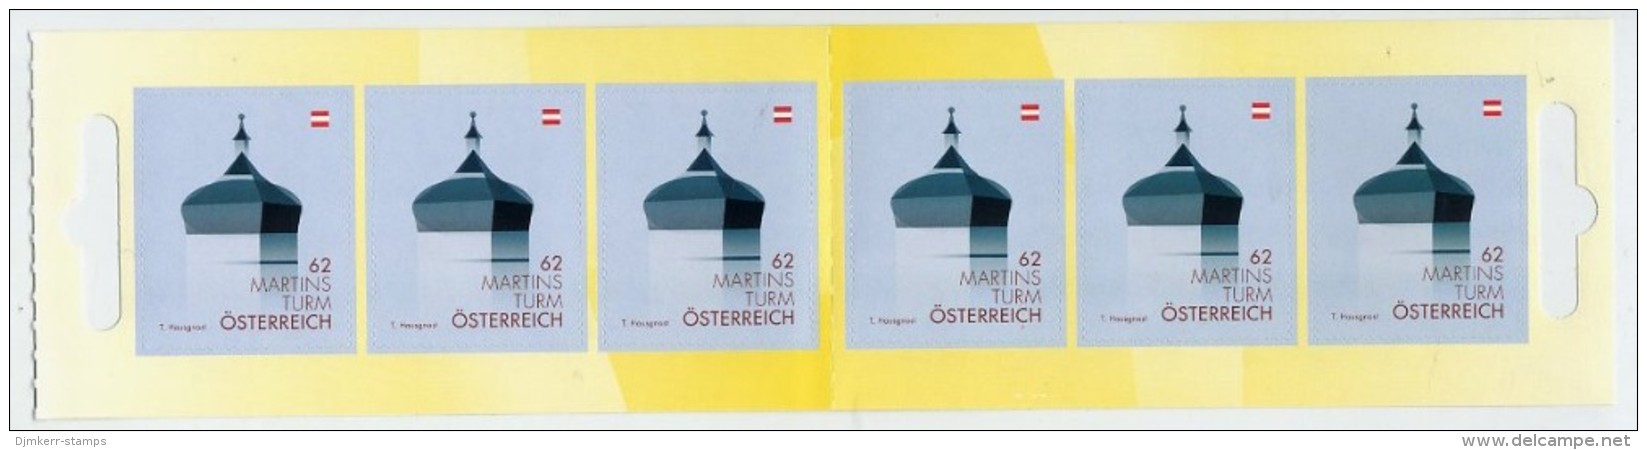 AUSTRIA 2013 Landmarks  Definitive 62 C. (Martinsturm) Retail Pack With 10 Stamps.  Michel MH 0-22 (3093) - Nuovi